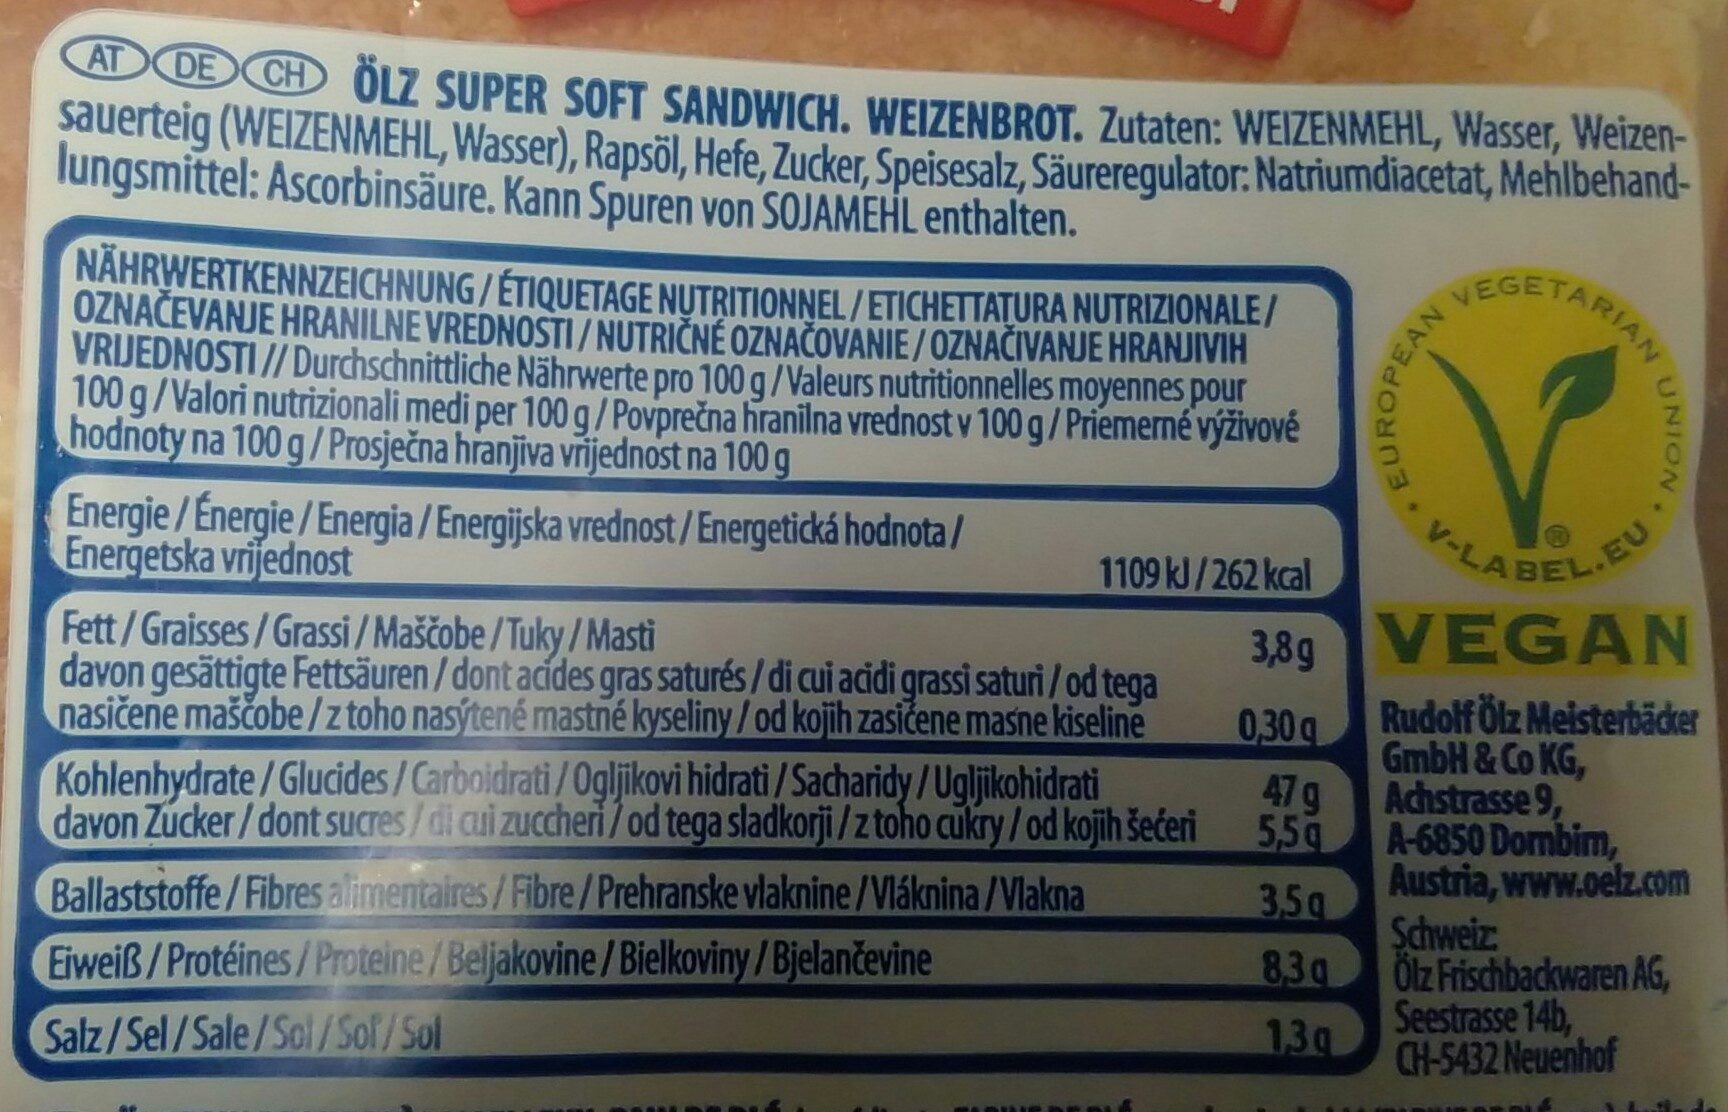 SUPER SOFT SANDWICH - Zutaten